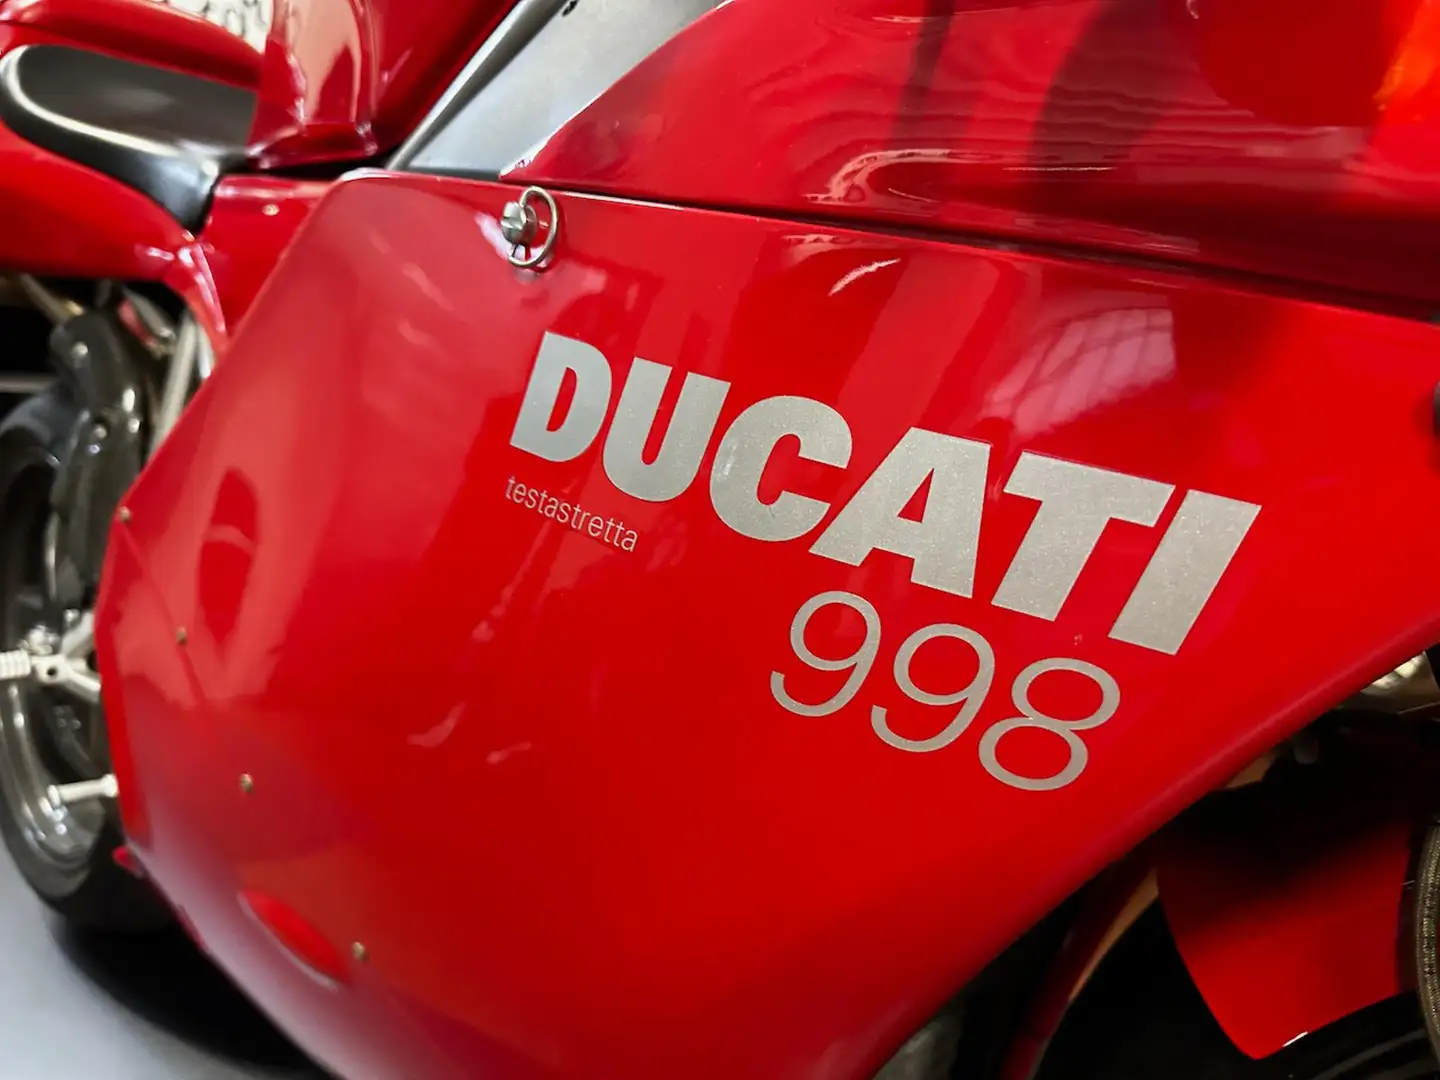 Ducati 998 ORIGINALE Rood - 2